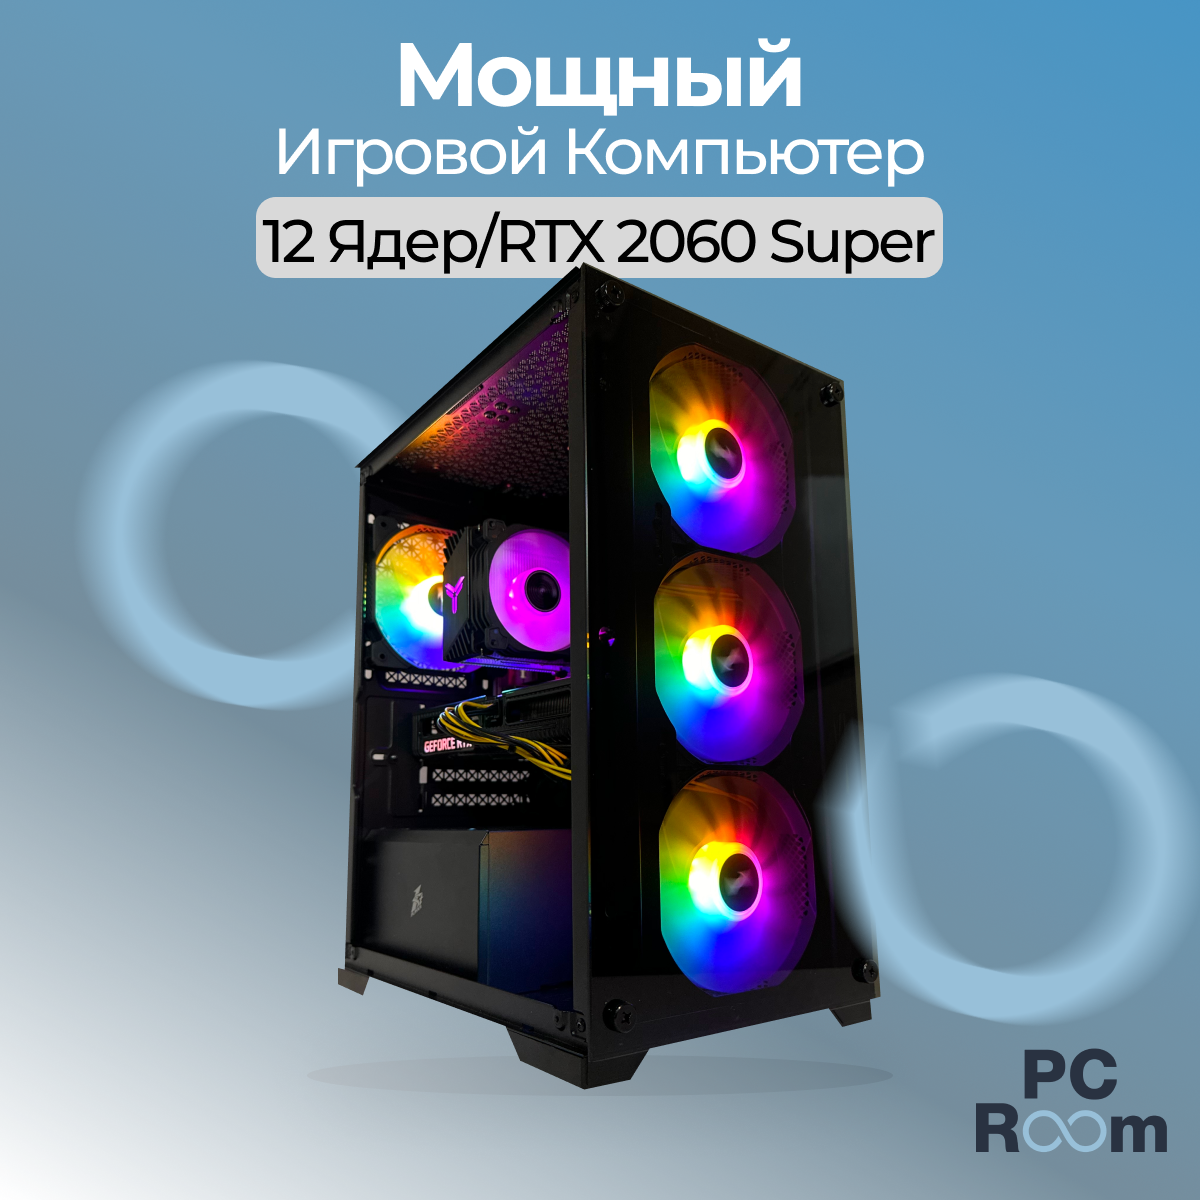 Игровой компьютер M-Stand: 12 Ядер / RTX 2060 super / 16GB DDR4 RAM / 512GB SSD / RGB PC Room